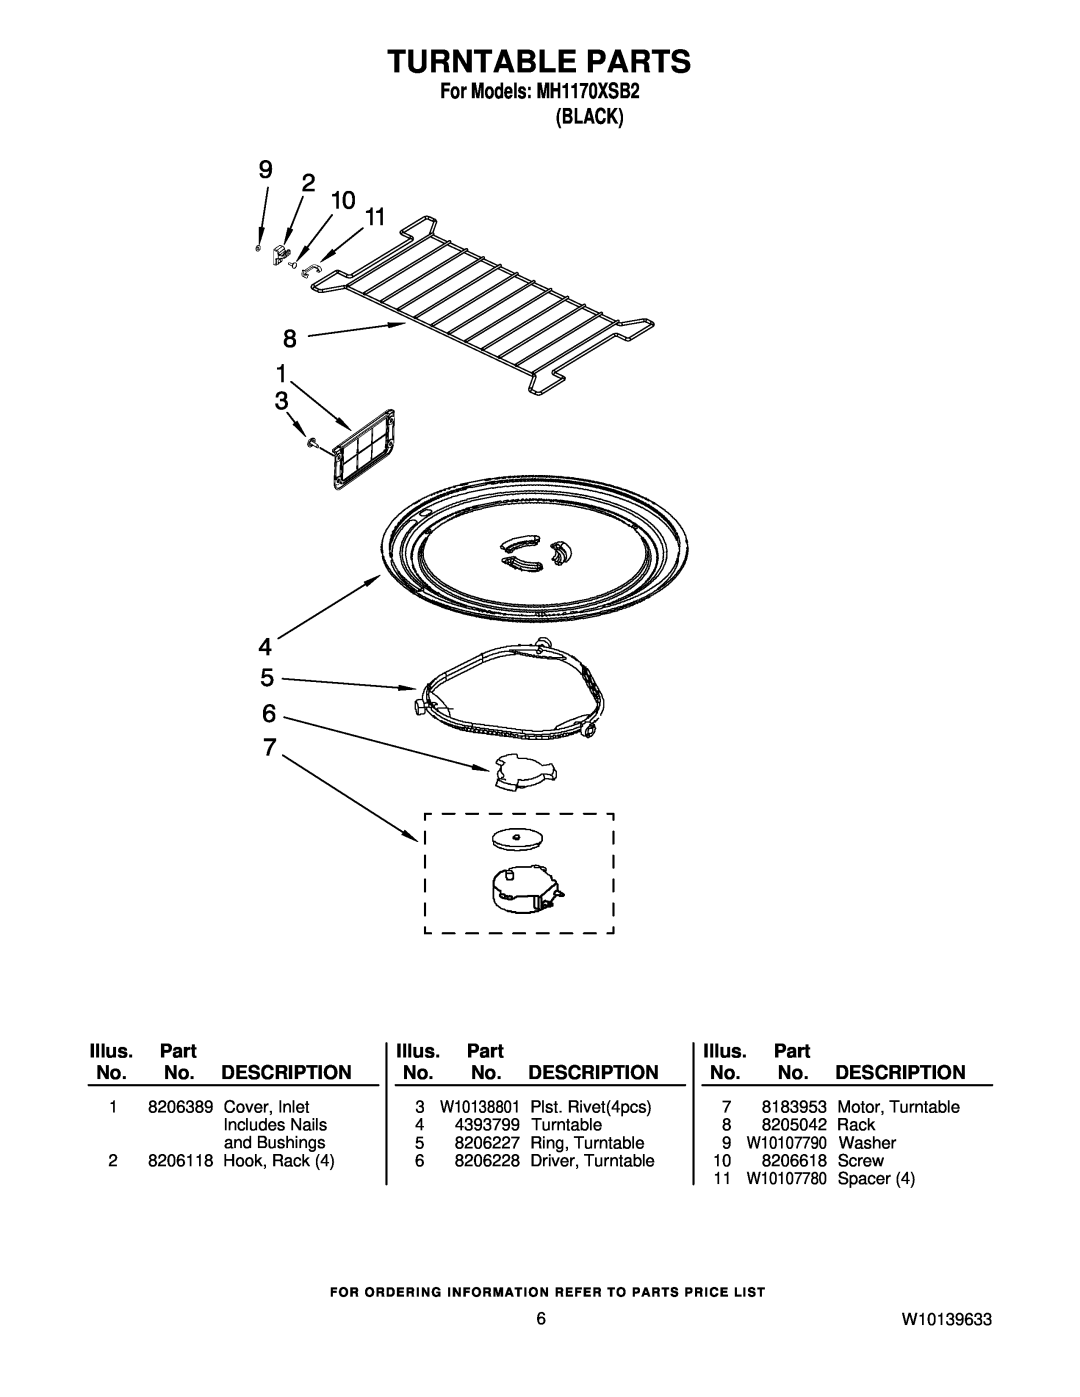 Whirlpool MH1170XSB2 manual Turntable Parts, Illus. Part No. No. DESCRIPTION 